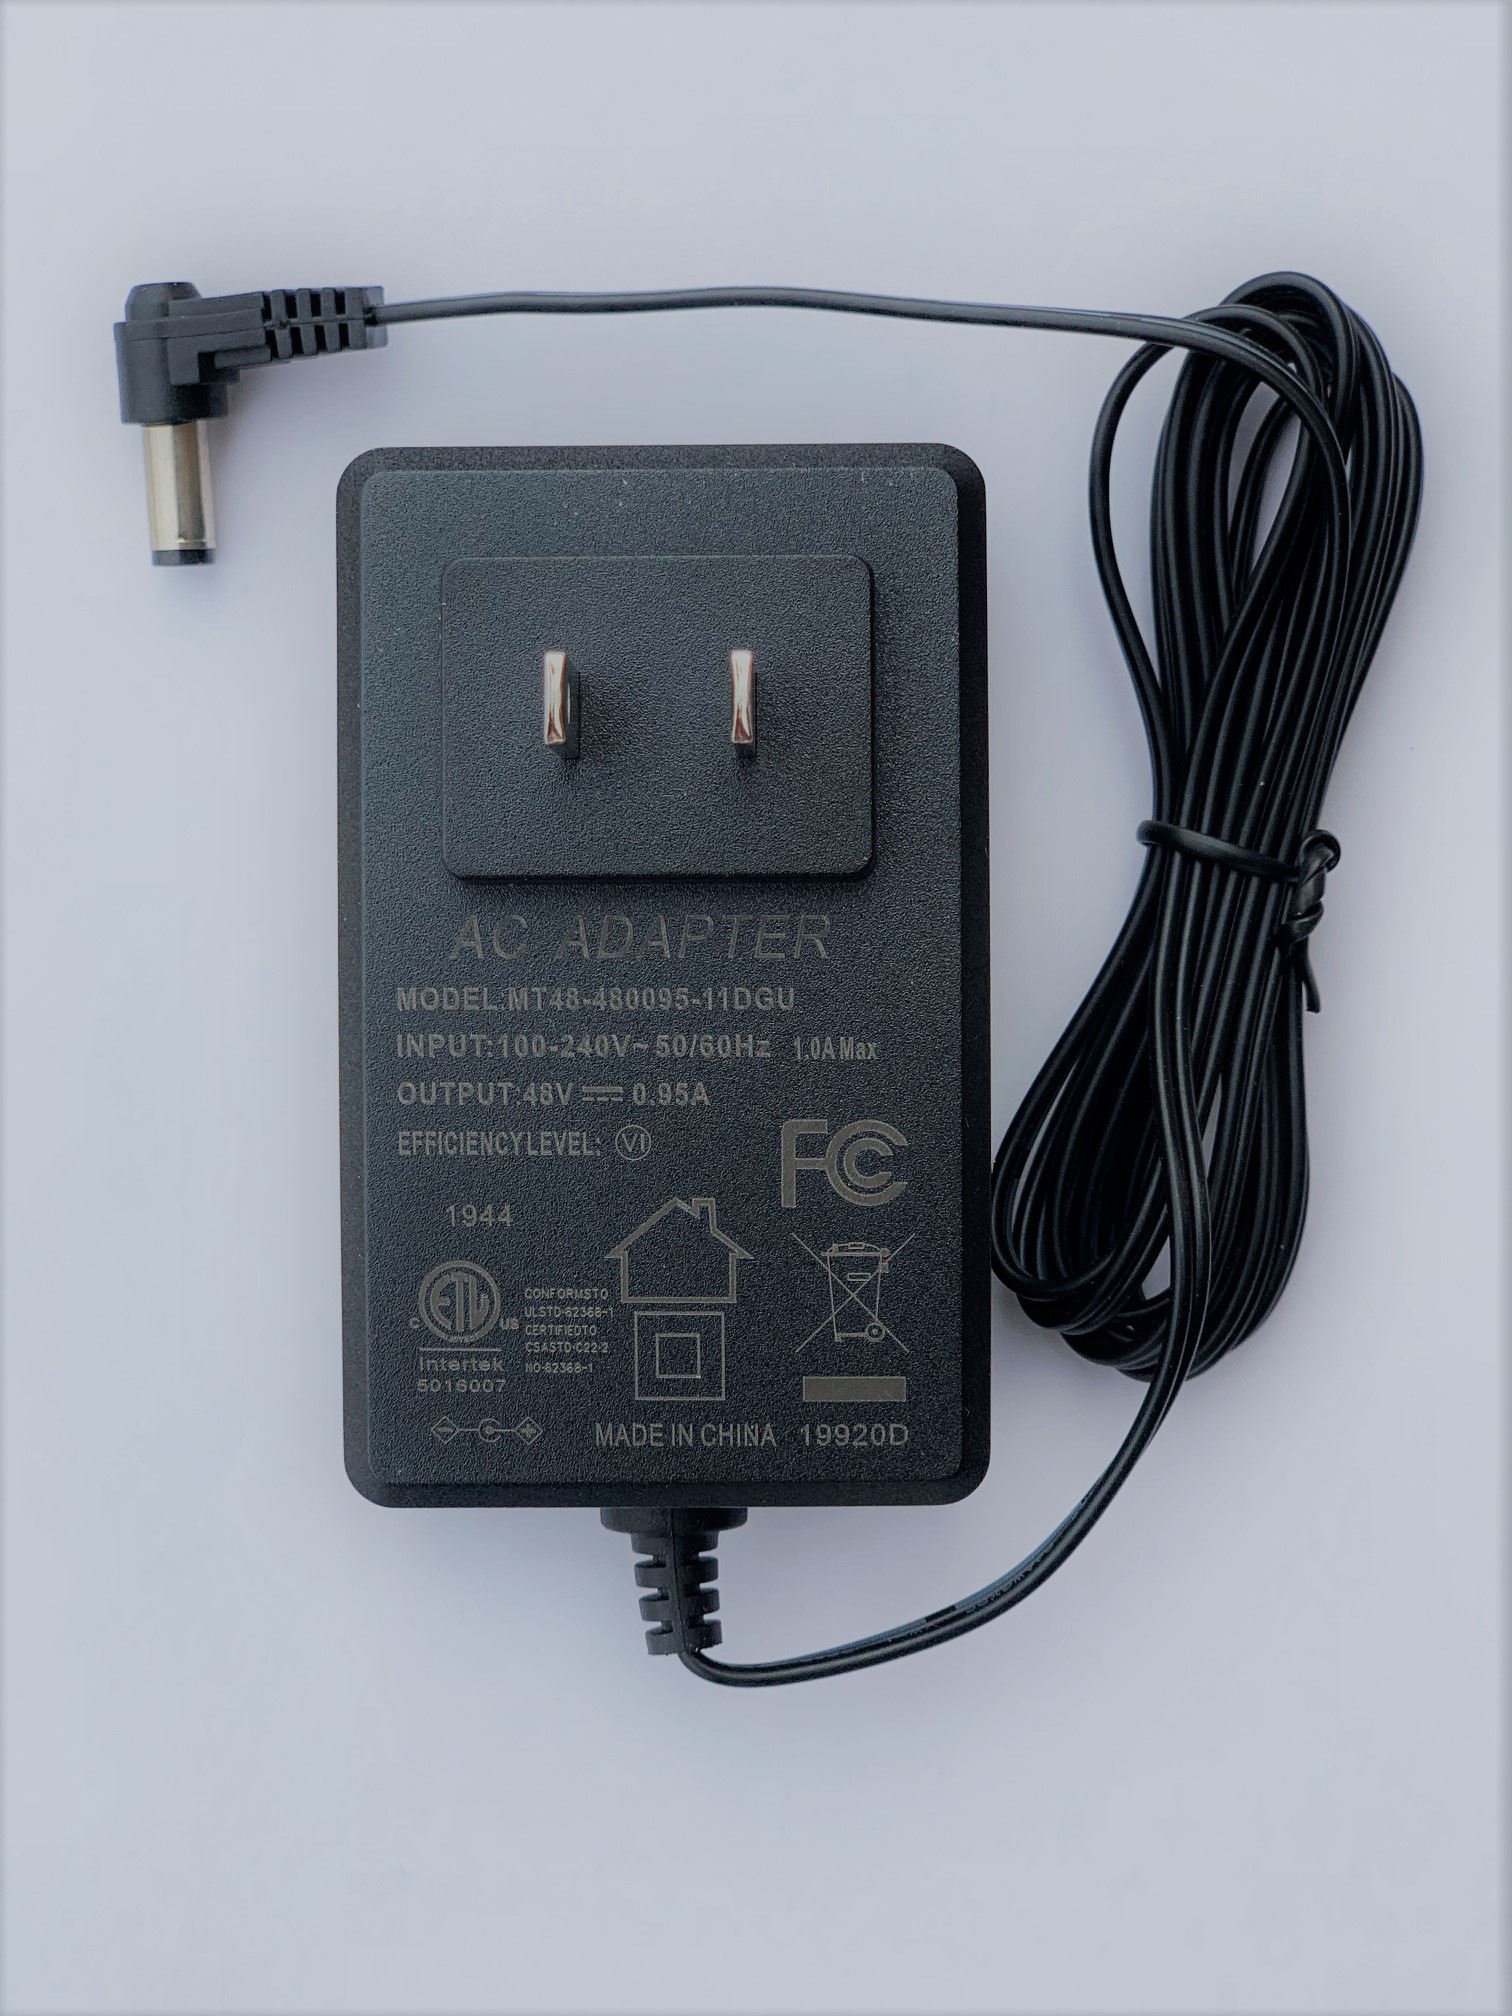 48POW-46-US MT48-480095-11DG Mikrotik 48vdc, 45.6 watt universal switching power supply wirth right angle 2.1mm DC plug and Type A USA plug